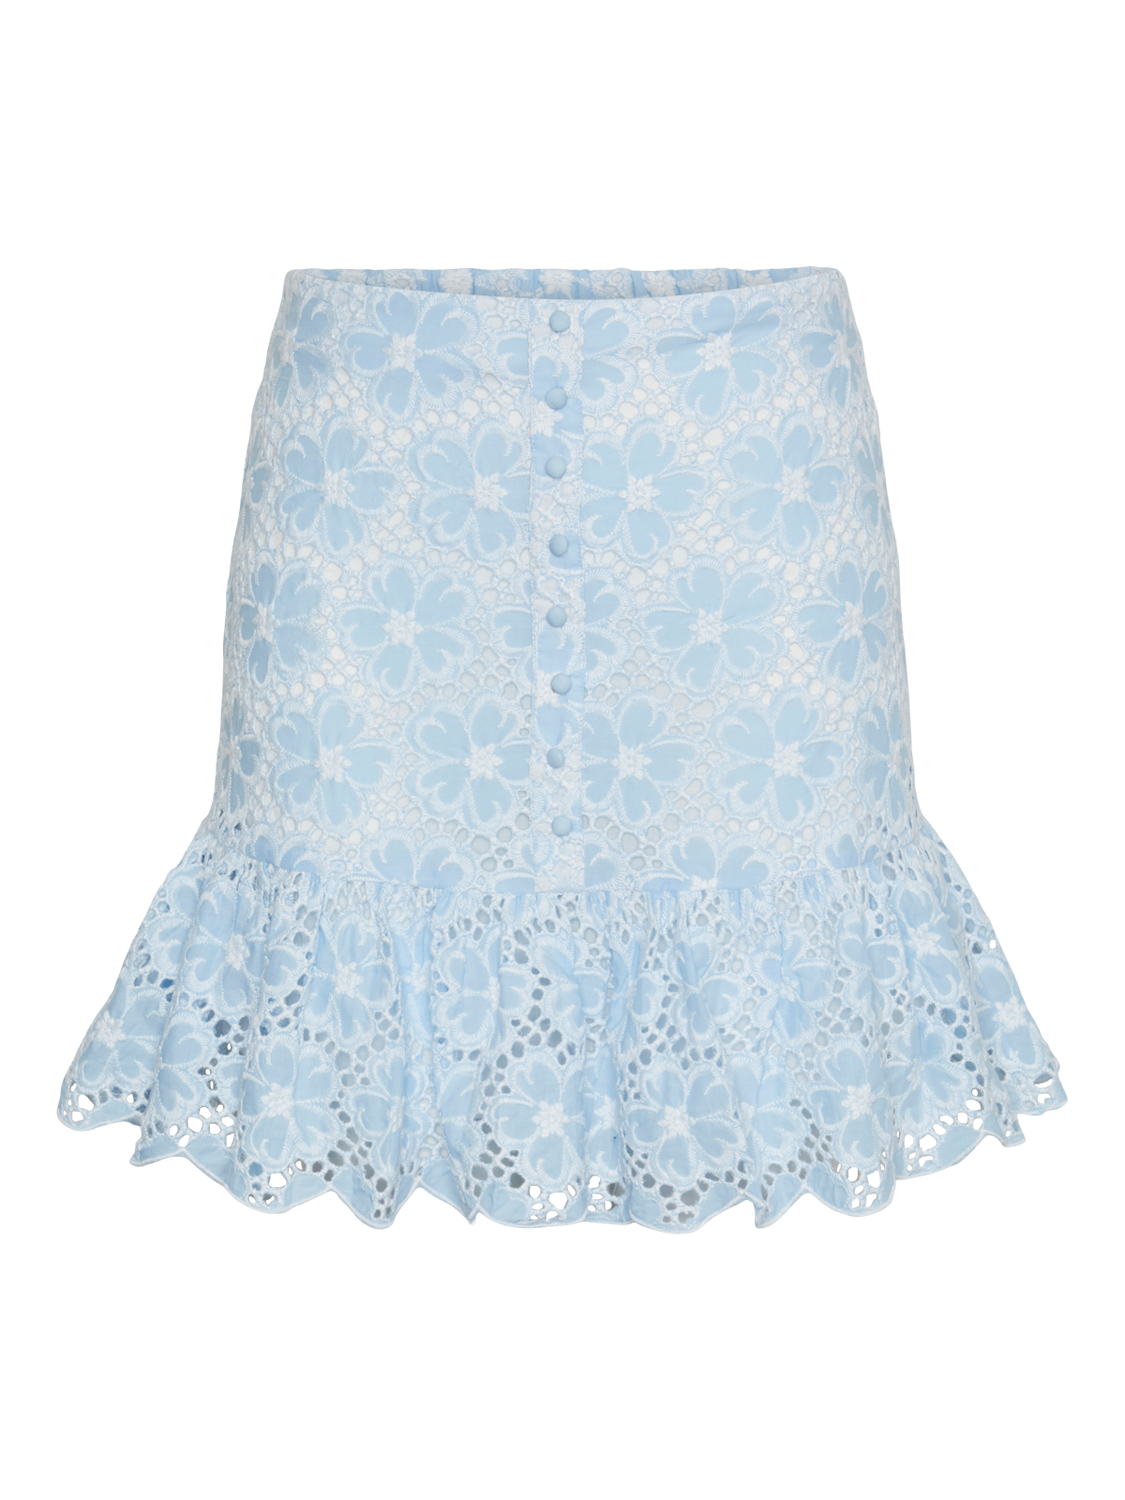 Yasbeauty Hw Mini Skirt - Clear Sky Star White